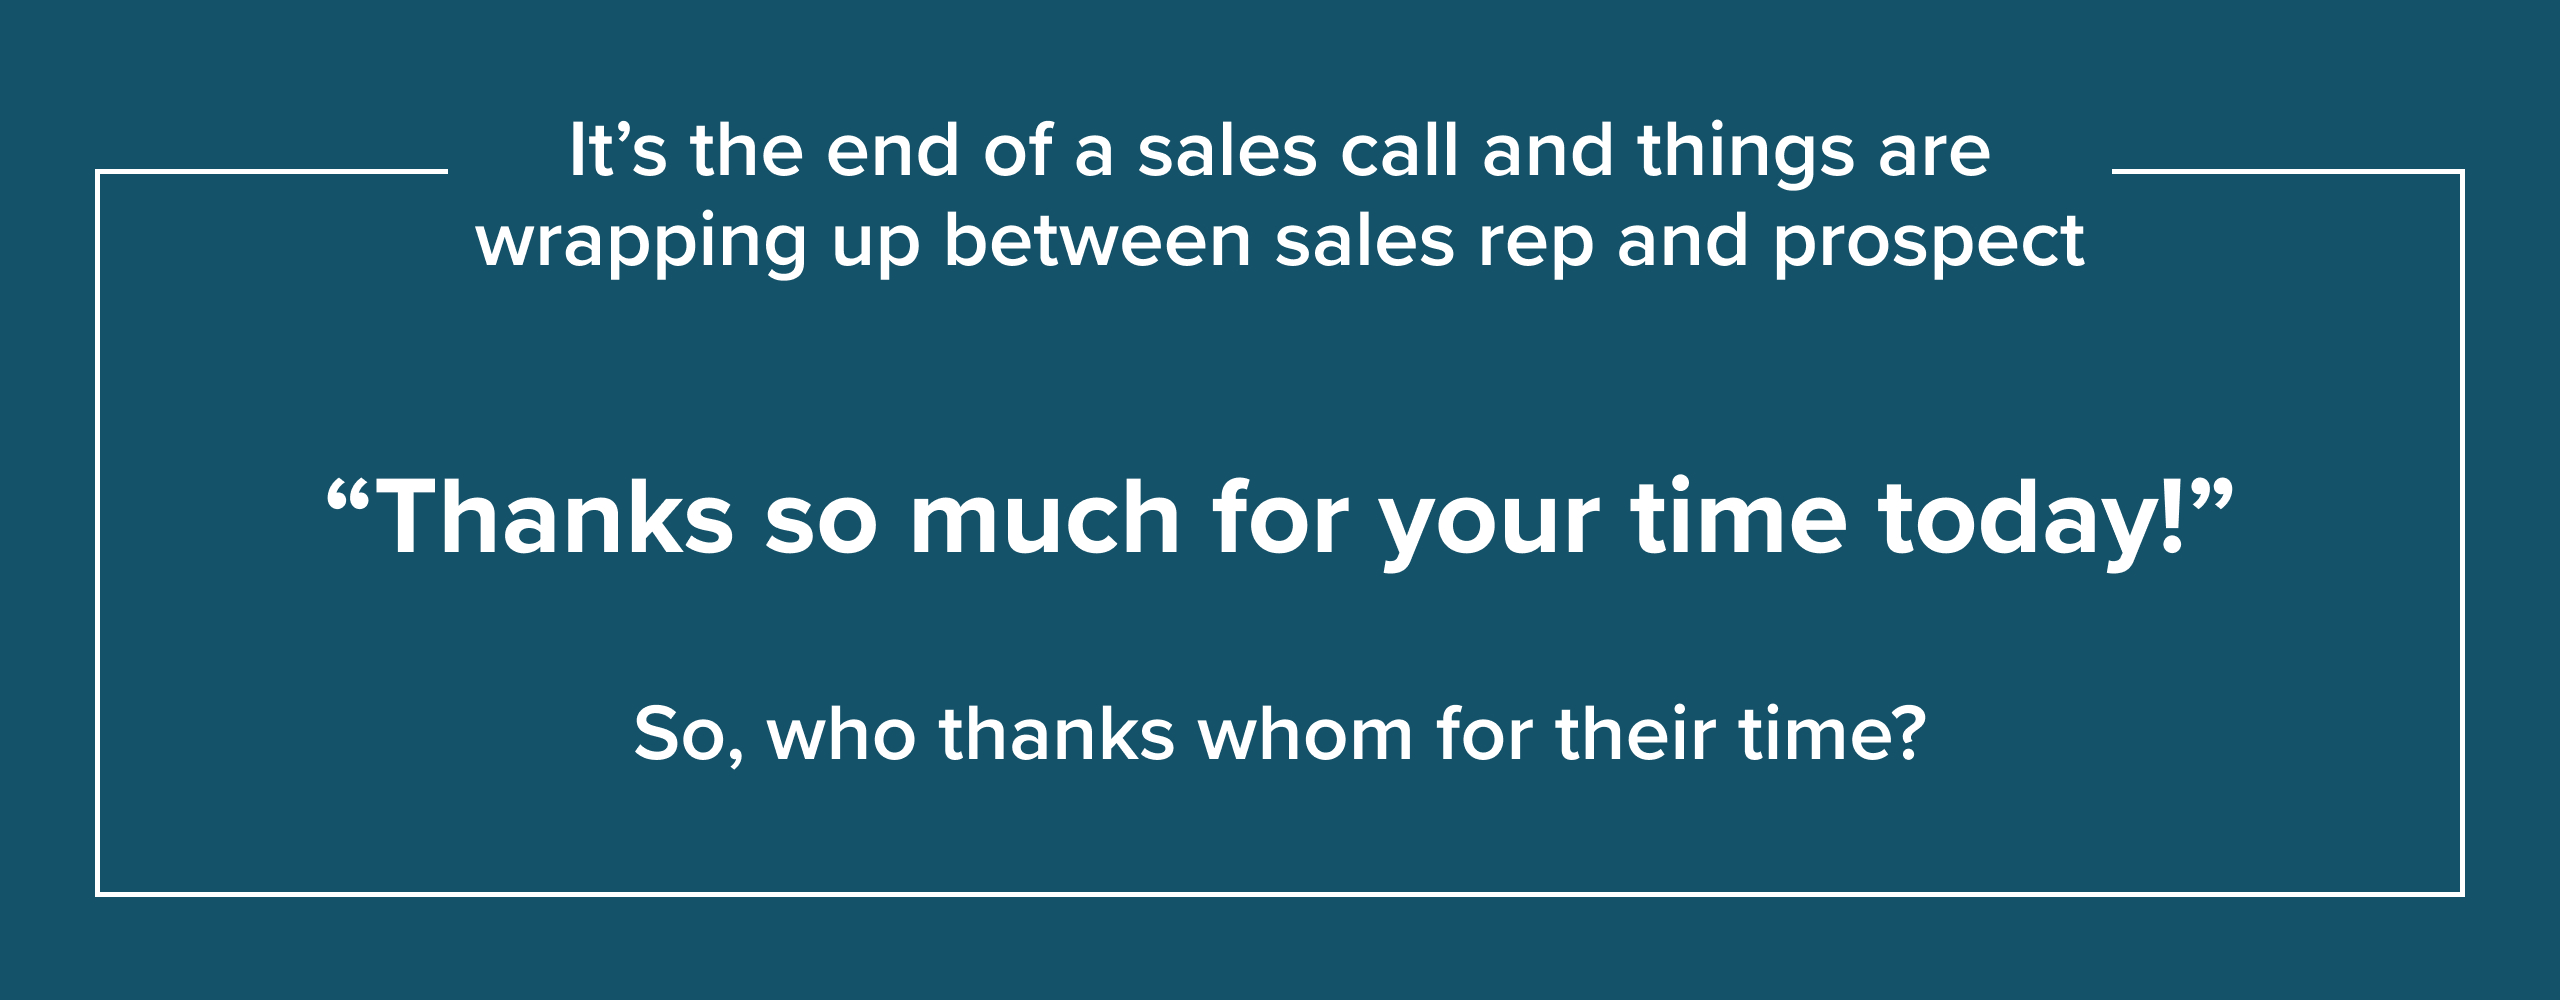 Sales-conversations-language